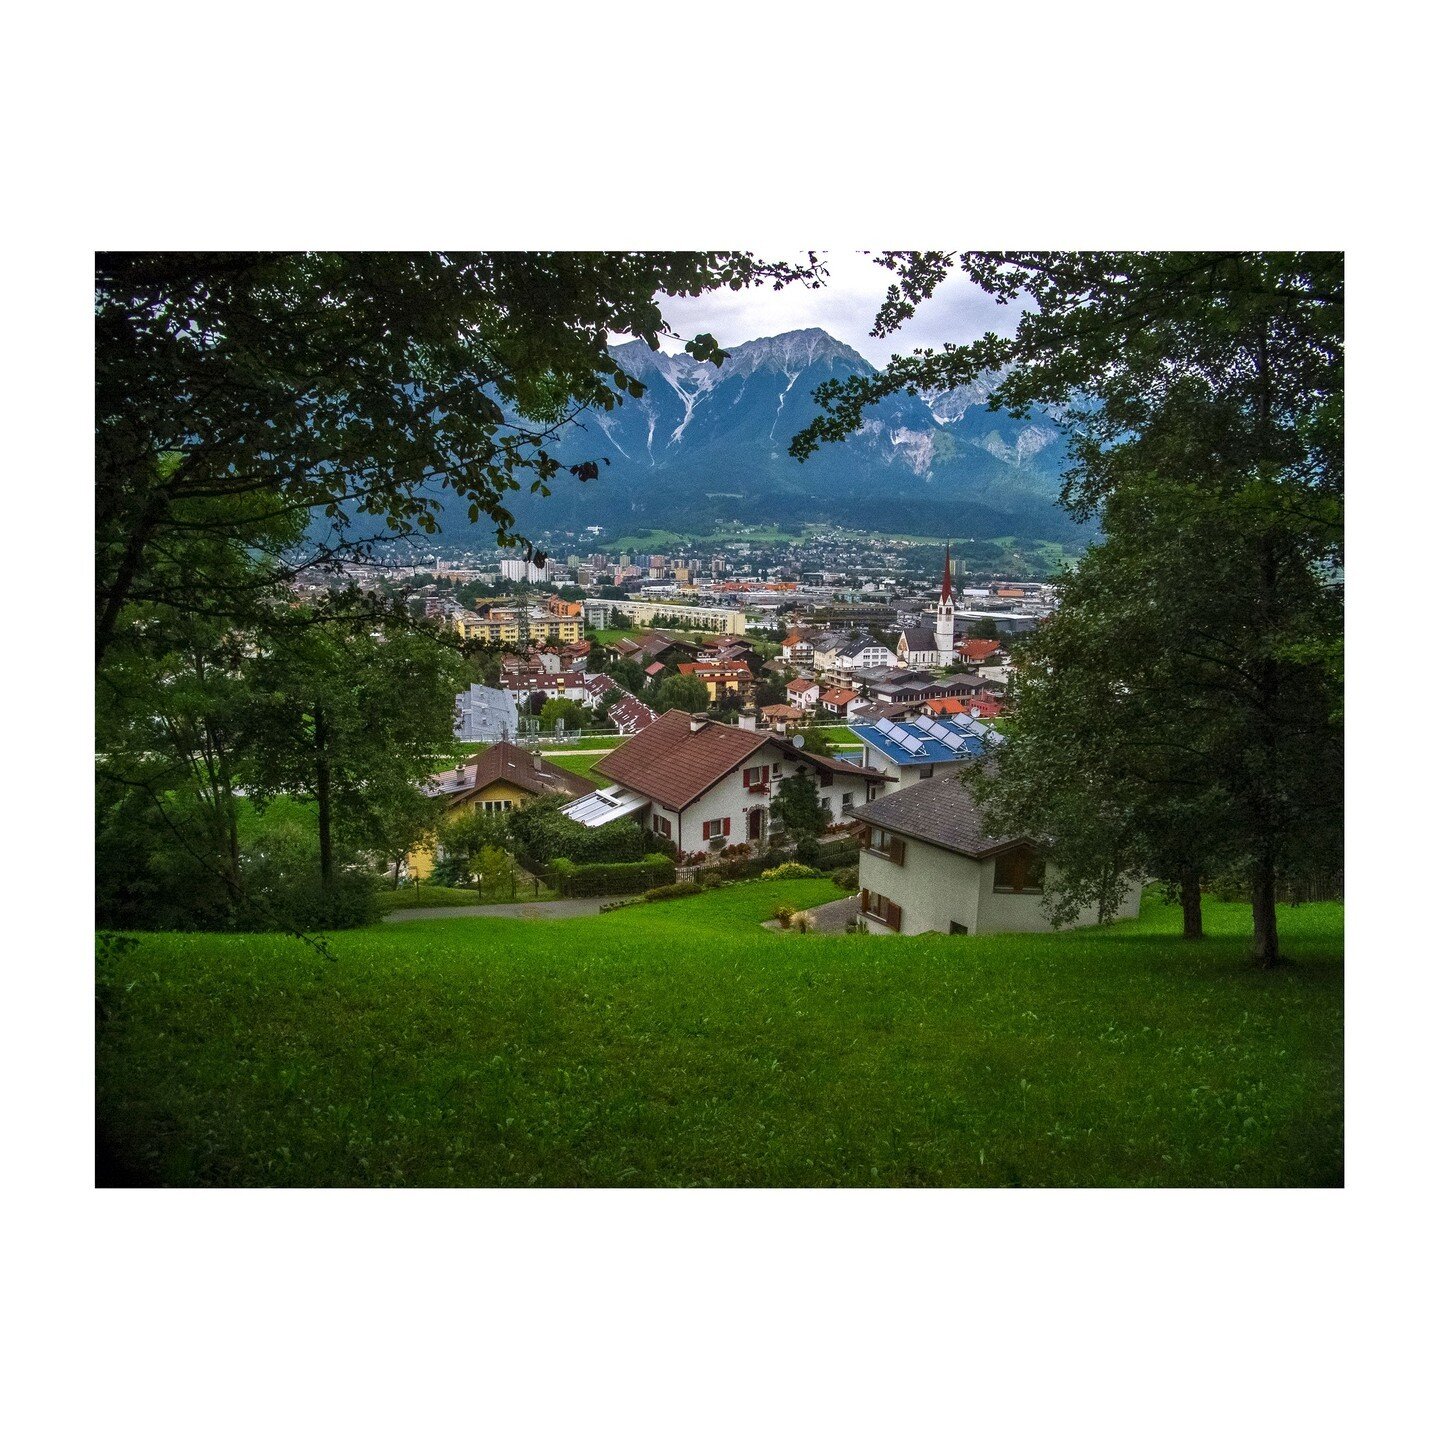 Innsbruck, Austria 2013.

Click on the link in bio to order your copy! 
__________
#CityScape #EuropeanDestinations #TheAlps #InssbruckAustria #PhotoOnYourWall #FeelAustria #Alps #Austria_Memories #MountainArea #AustrainAlps #Innsbruck #EuropeanCity 